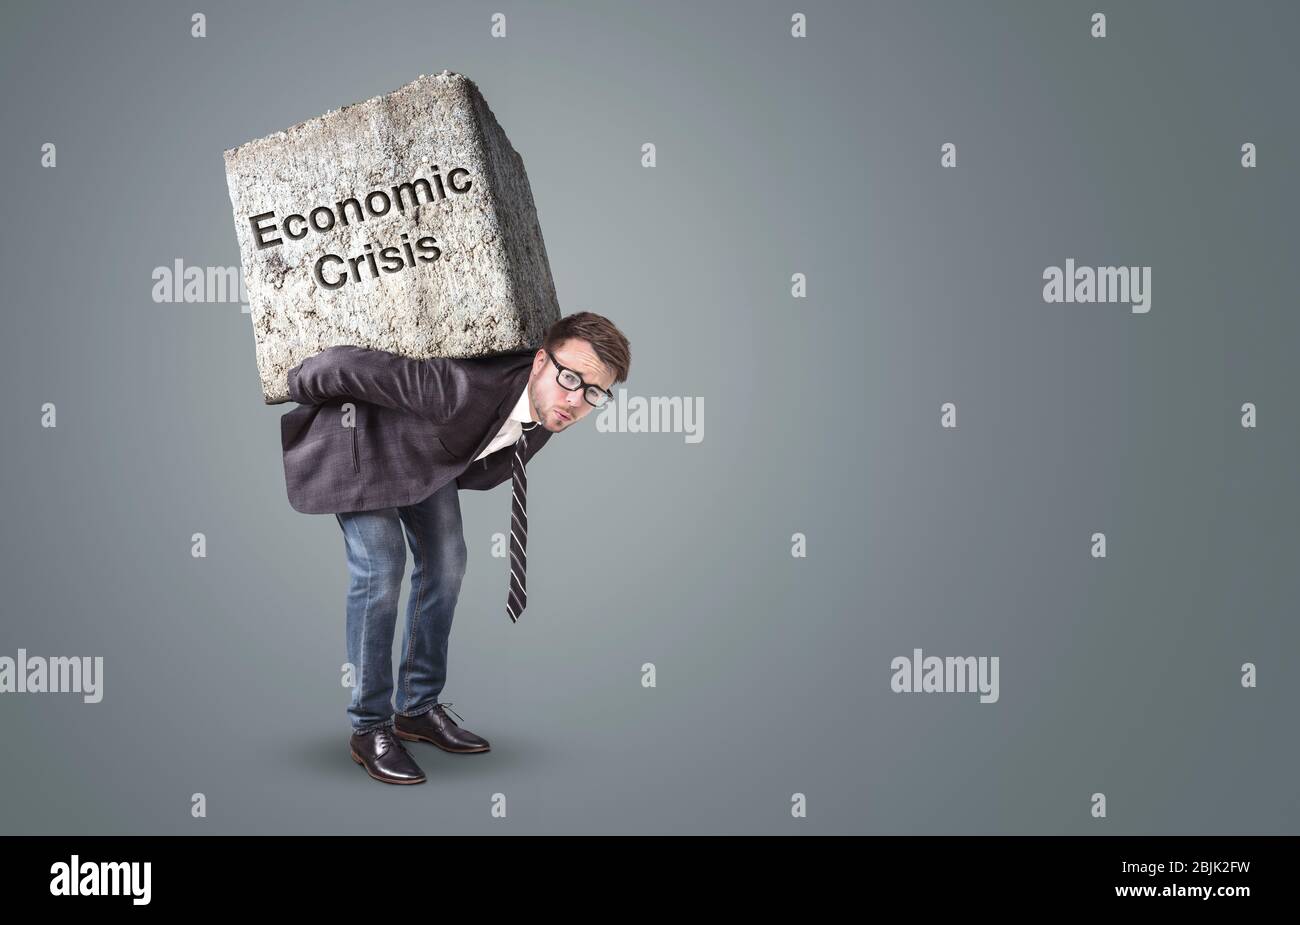 Man burdened by Economy Crisis Stock Photo